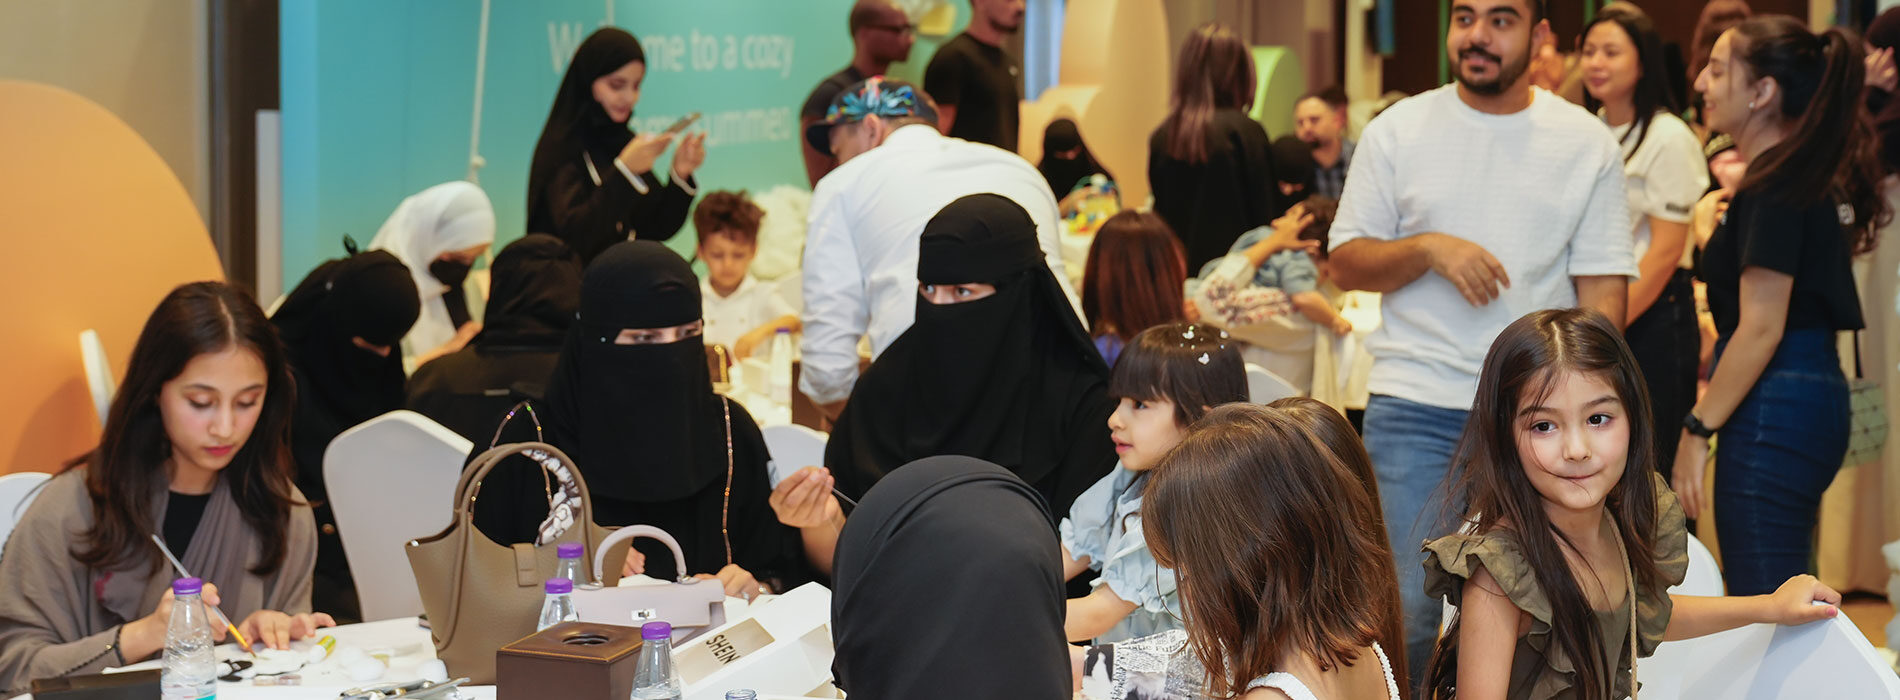 SHEIN hosts special event to launch kid’s collection “Cotton Wonderland” in Riyadh